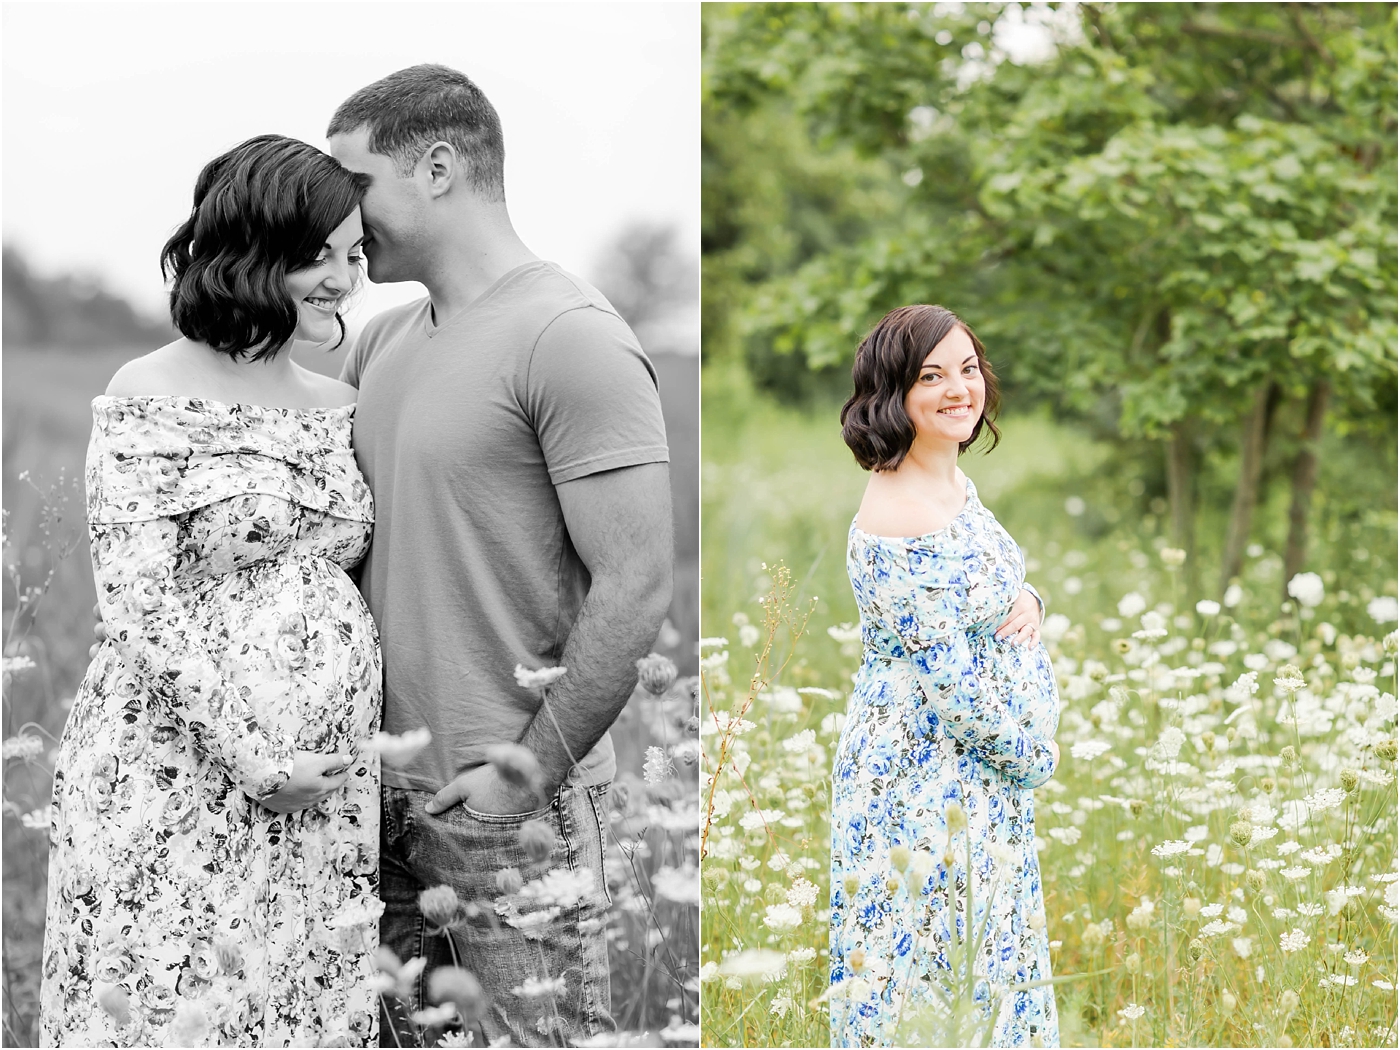 Loren Jackson Photography,Maternity Photos in Blue Floral Dress,Petros Park,Photographer Akron Ohio,